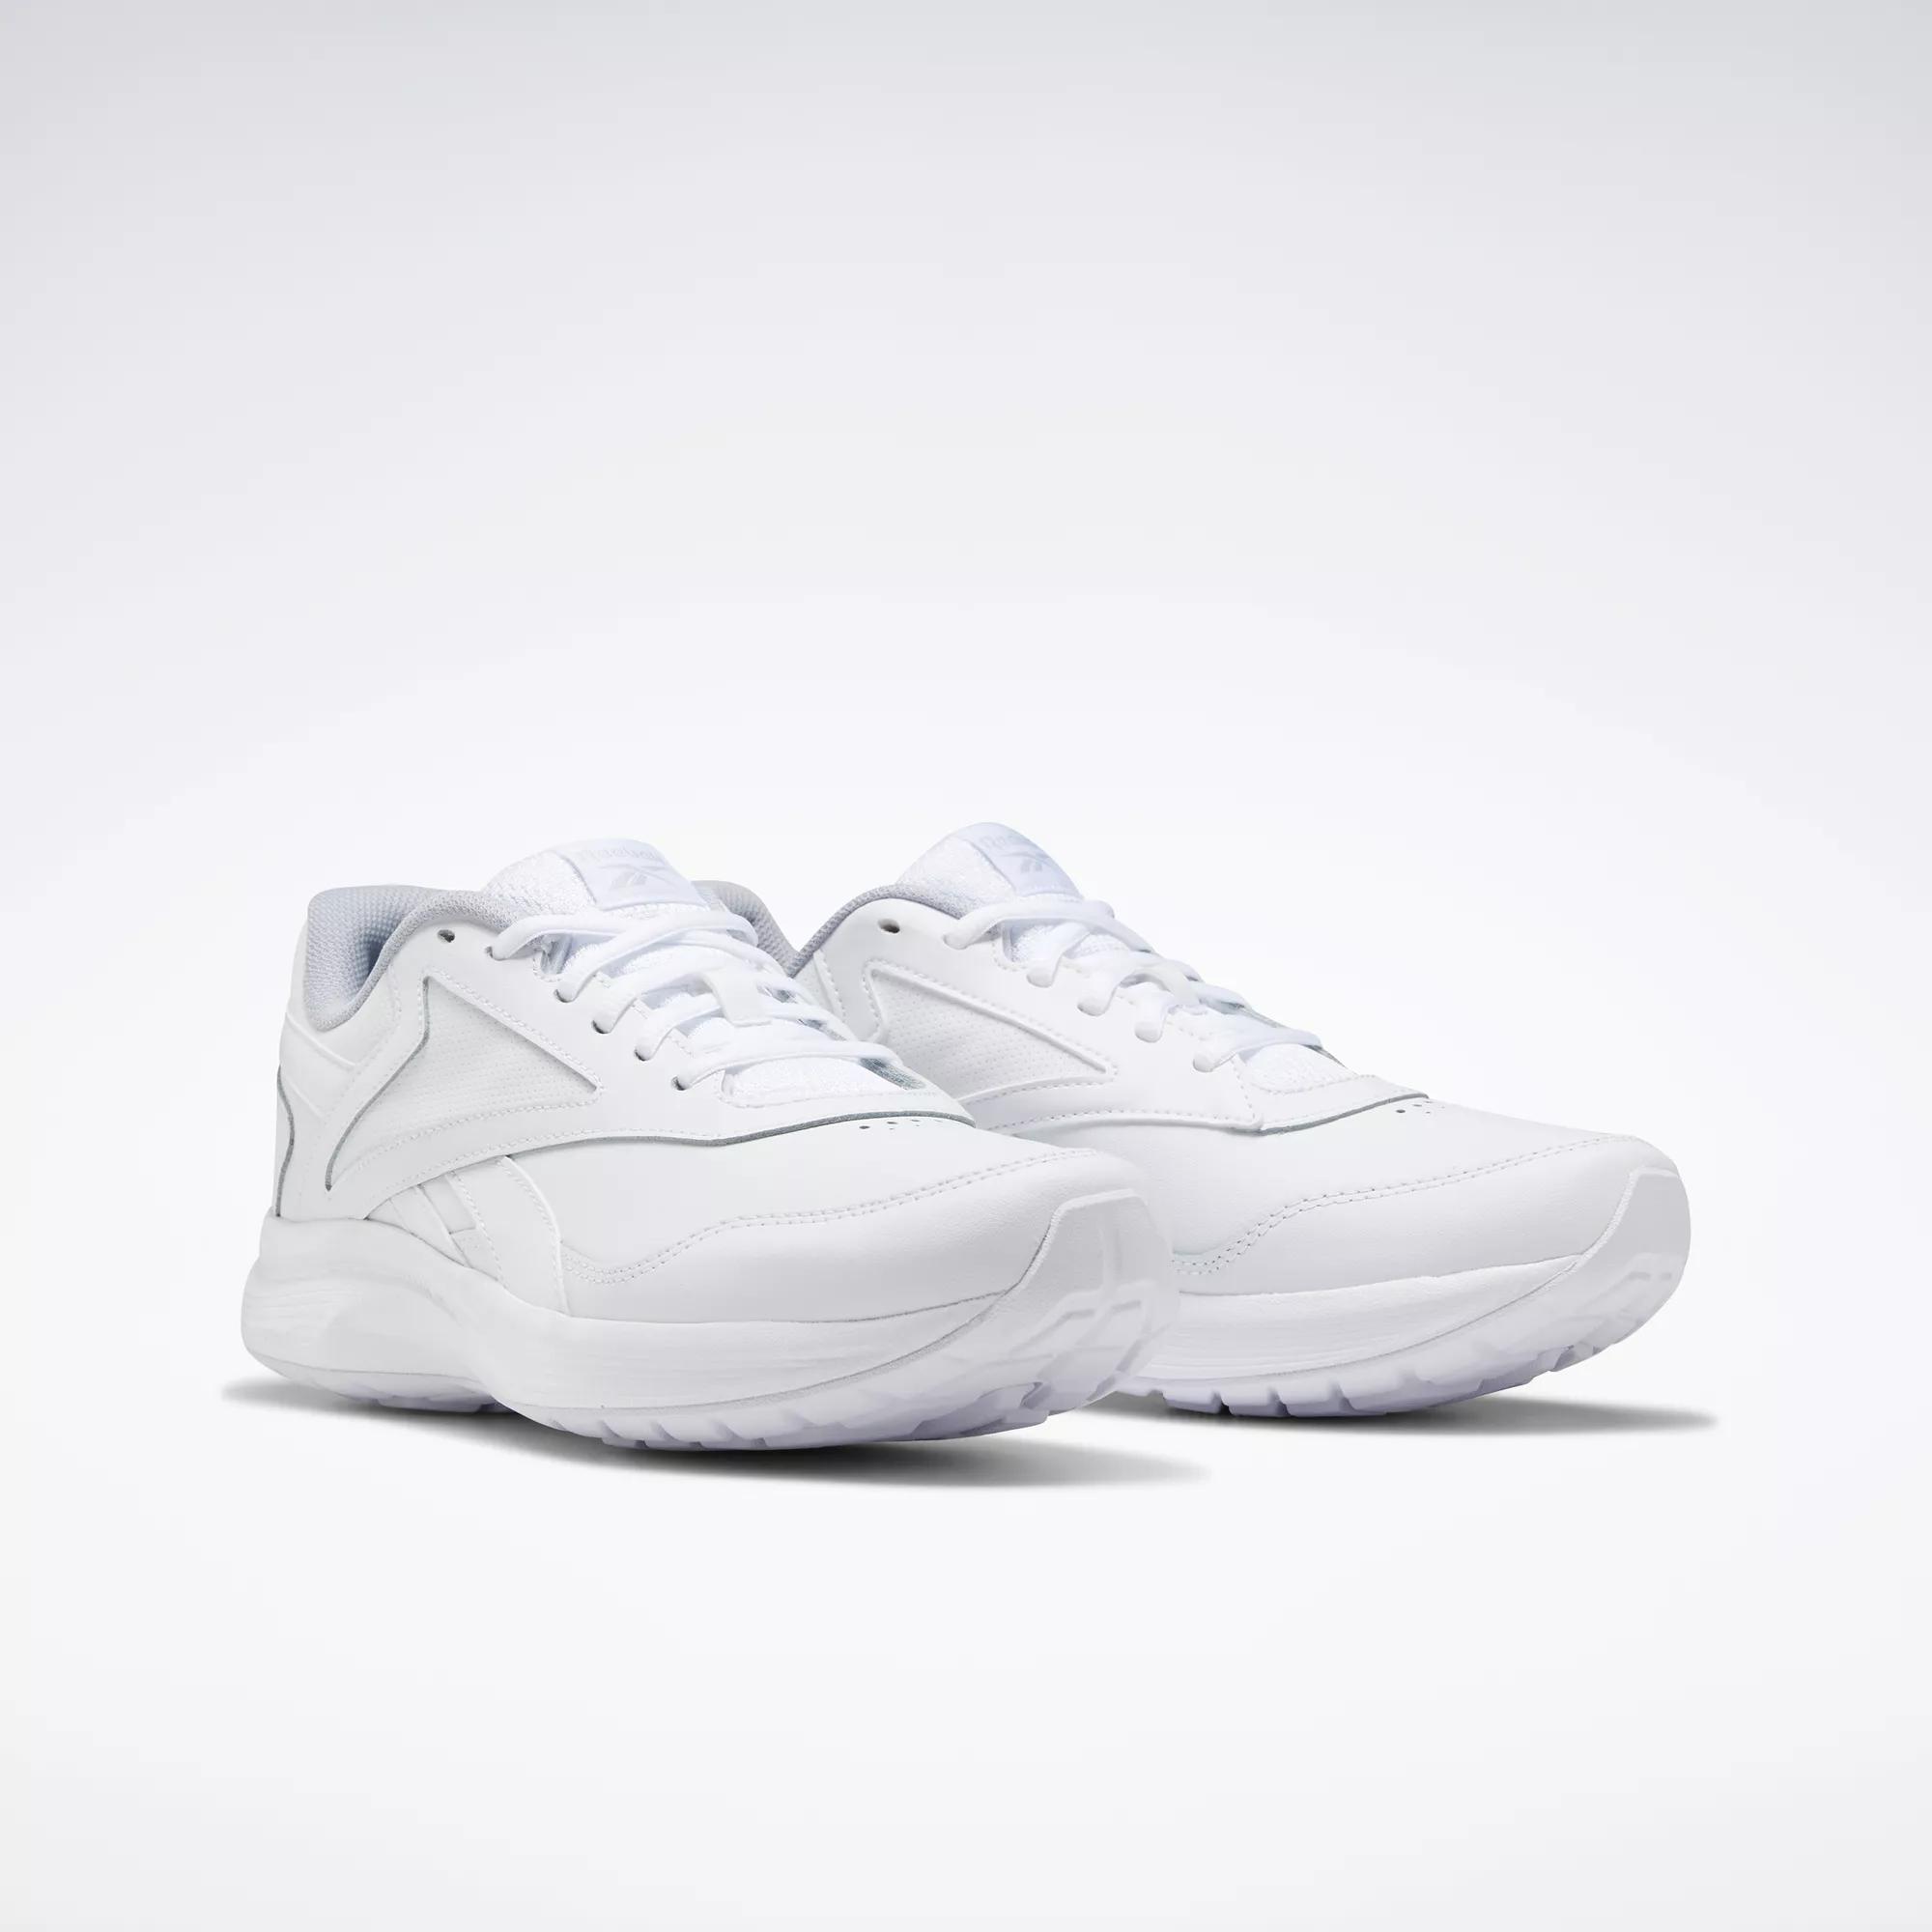 Walk Ultra 7 DMX MAX Wide Men's Shoes - White / Cold Grey 2 